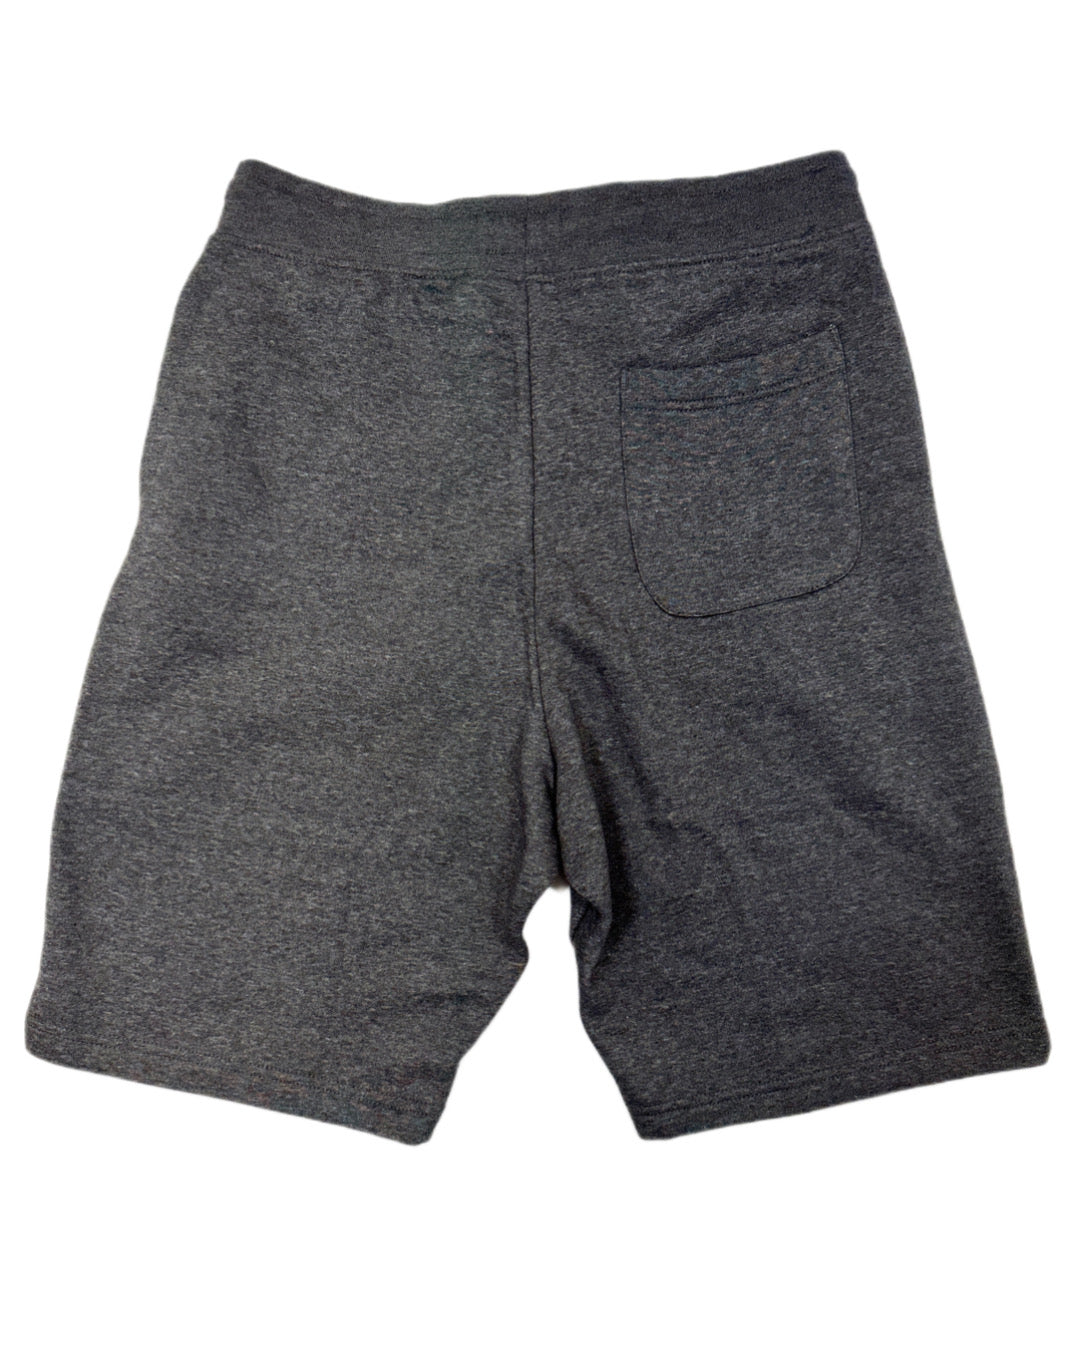 NEW! Men's Charcoal Lightning Embroidered Fleece Shorts